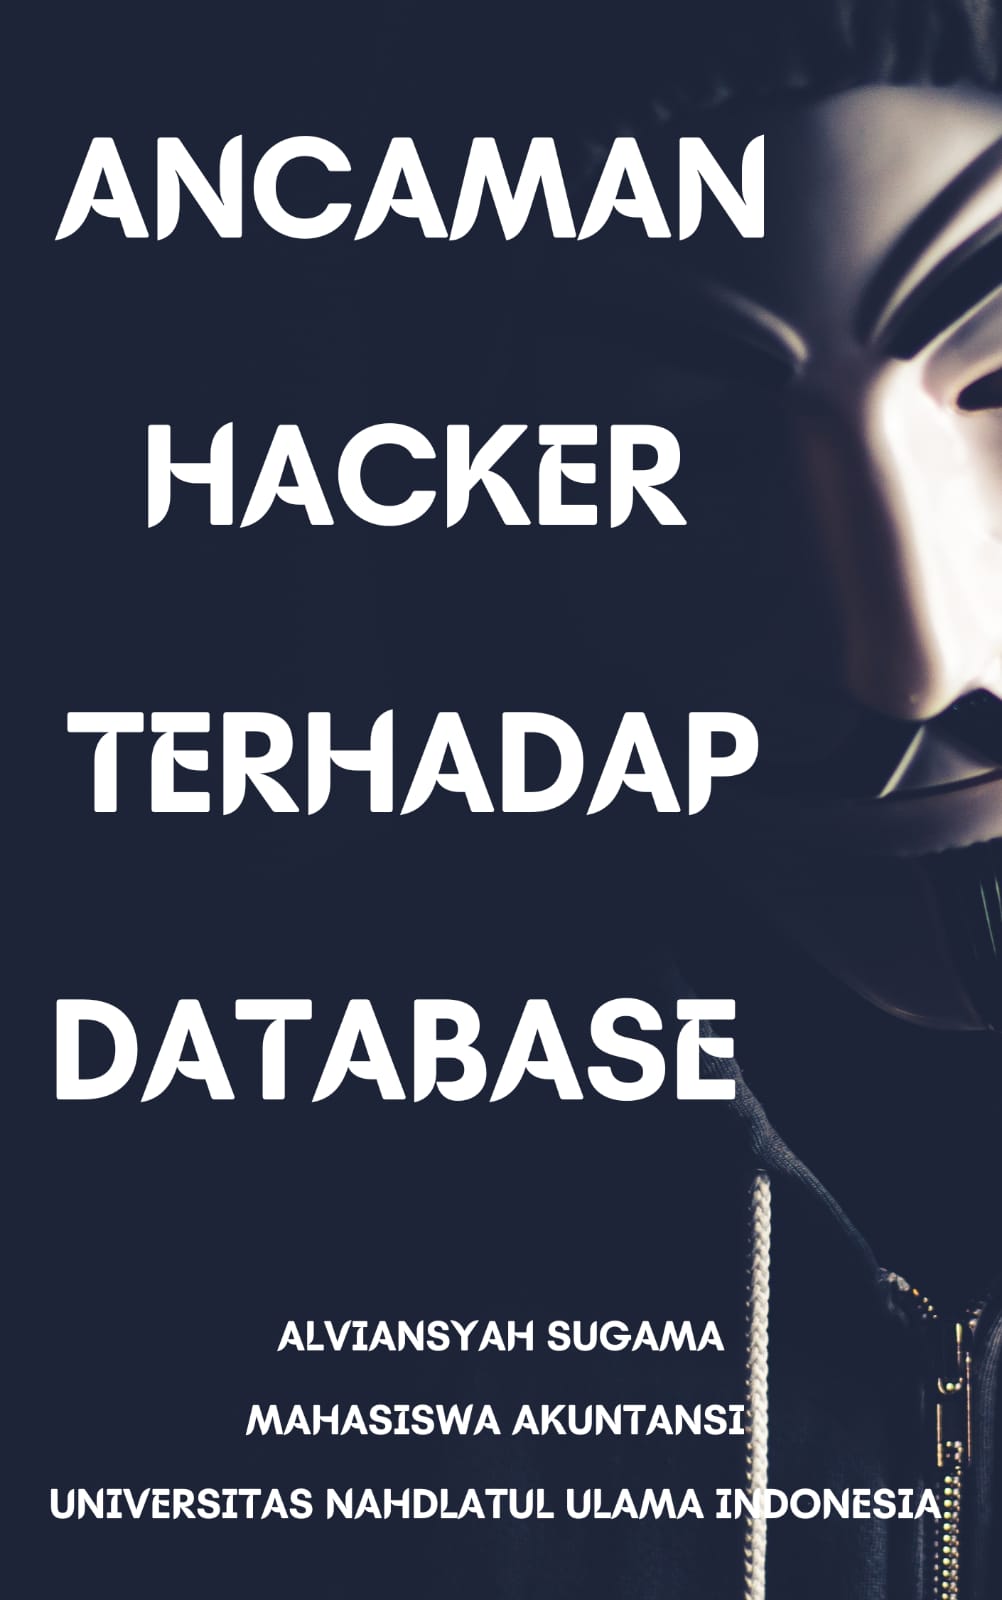 Ancaman Hacker Terhadap Database